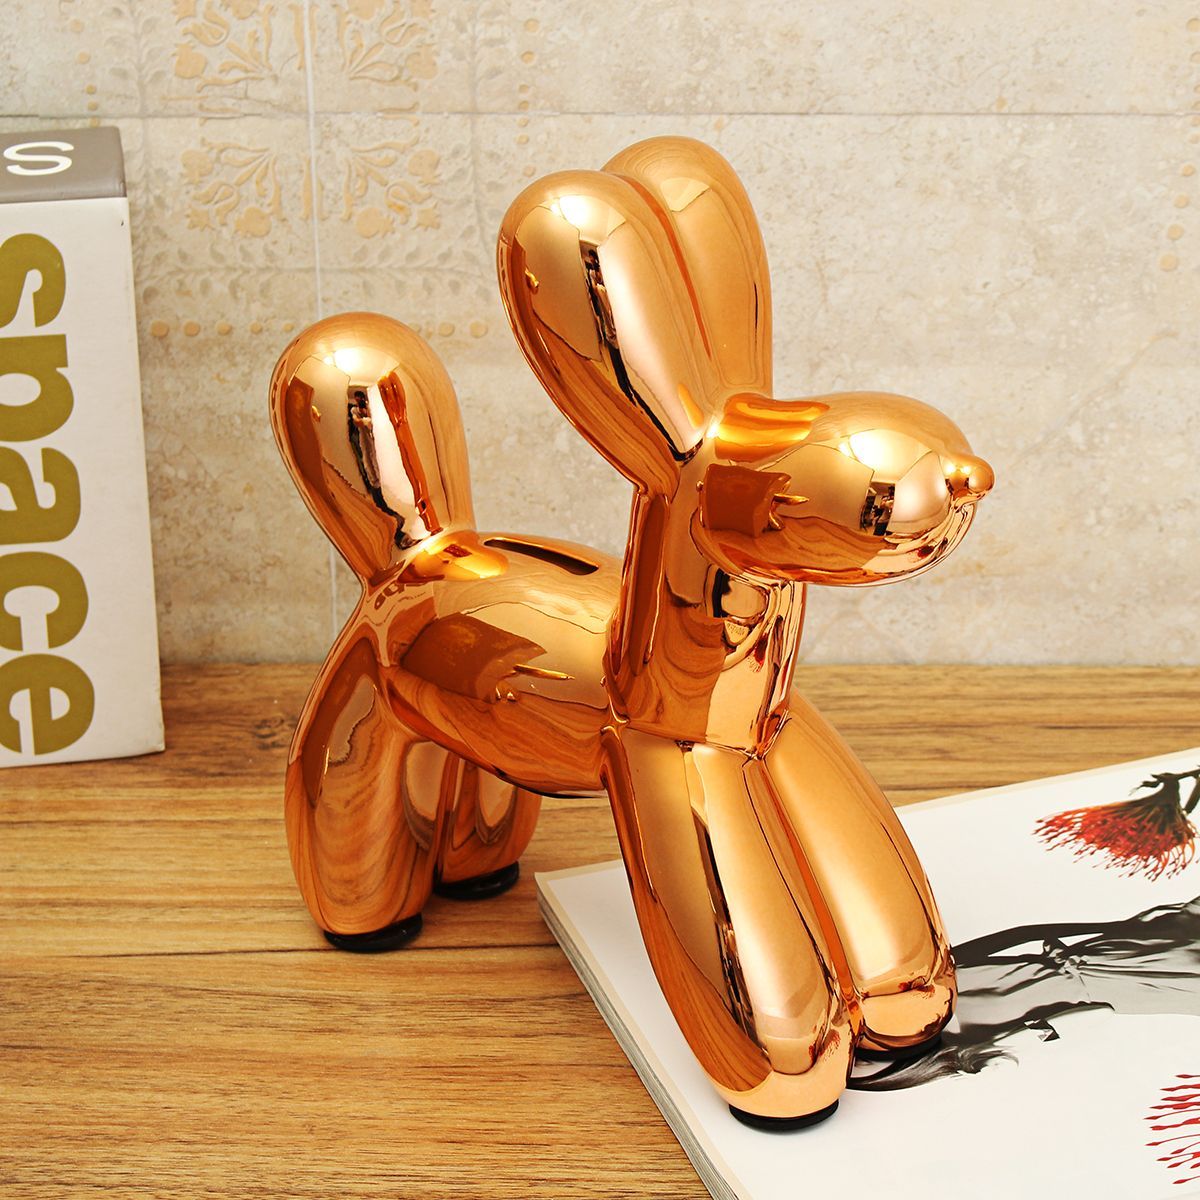 Balloon-Dog-Piggy-Bank-Coin-Money-Saving-Jar-Box-Holder-Travel-Wedding-Fund-Gift-Home-Decor-1343230